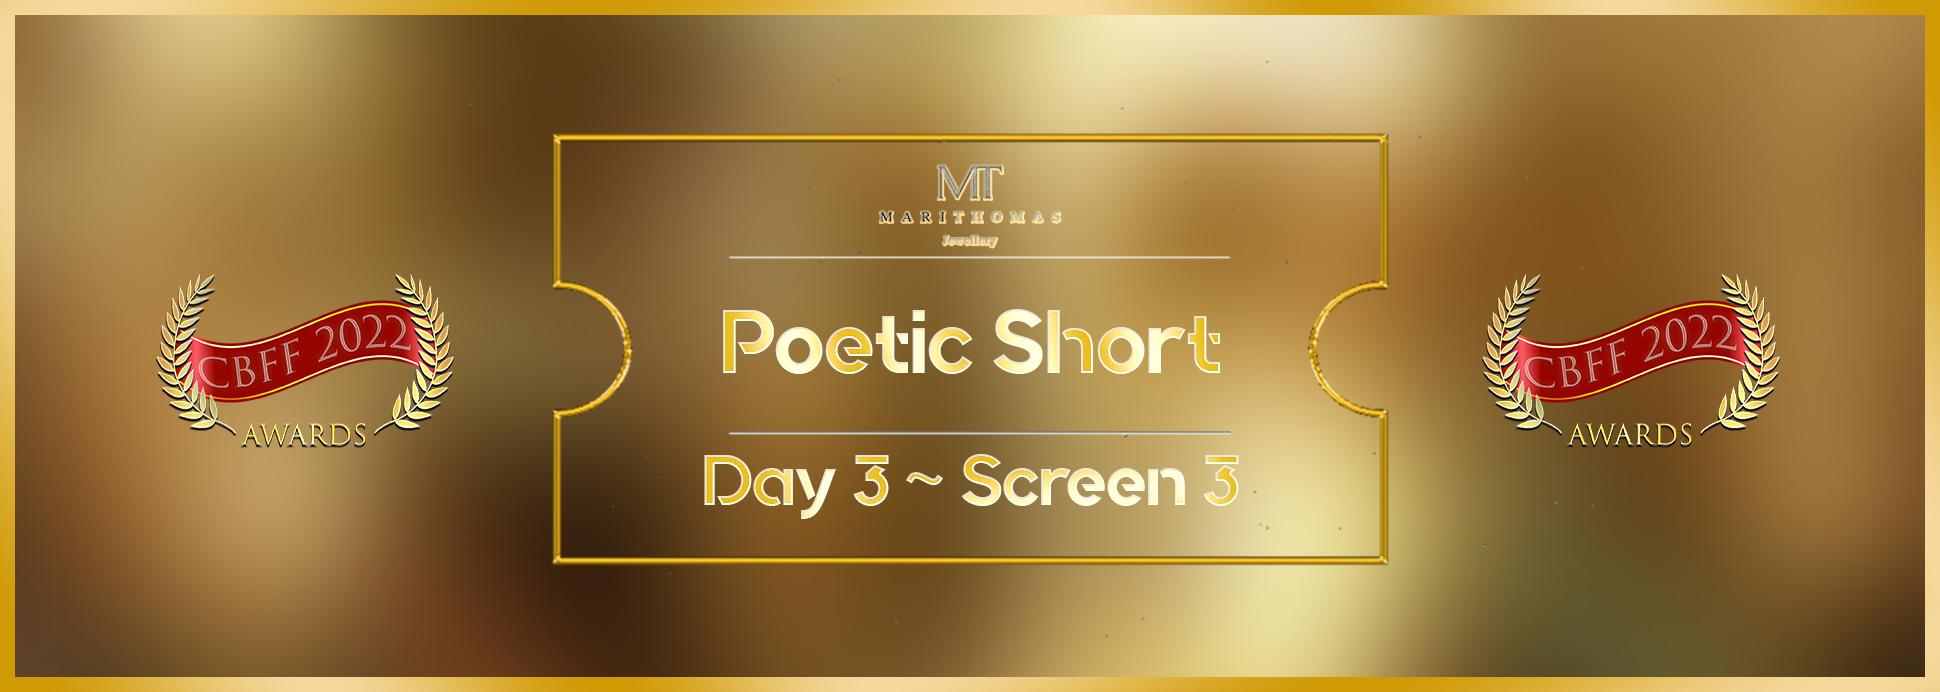 Day 3 Screen 3 Poetic Short Film